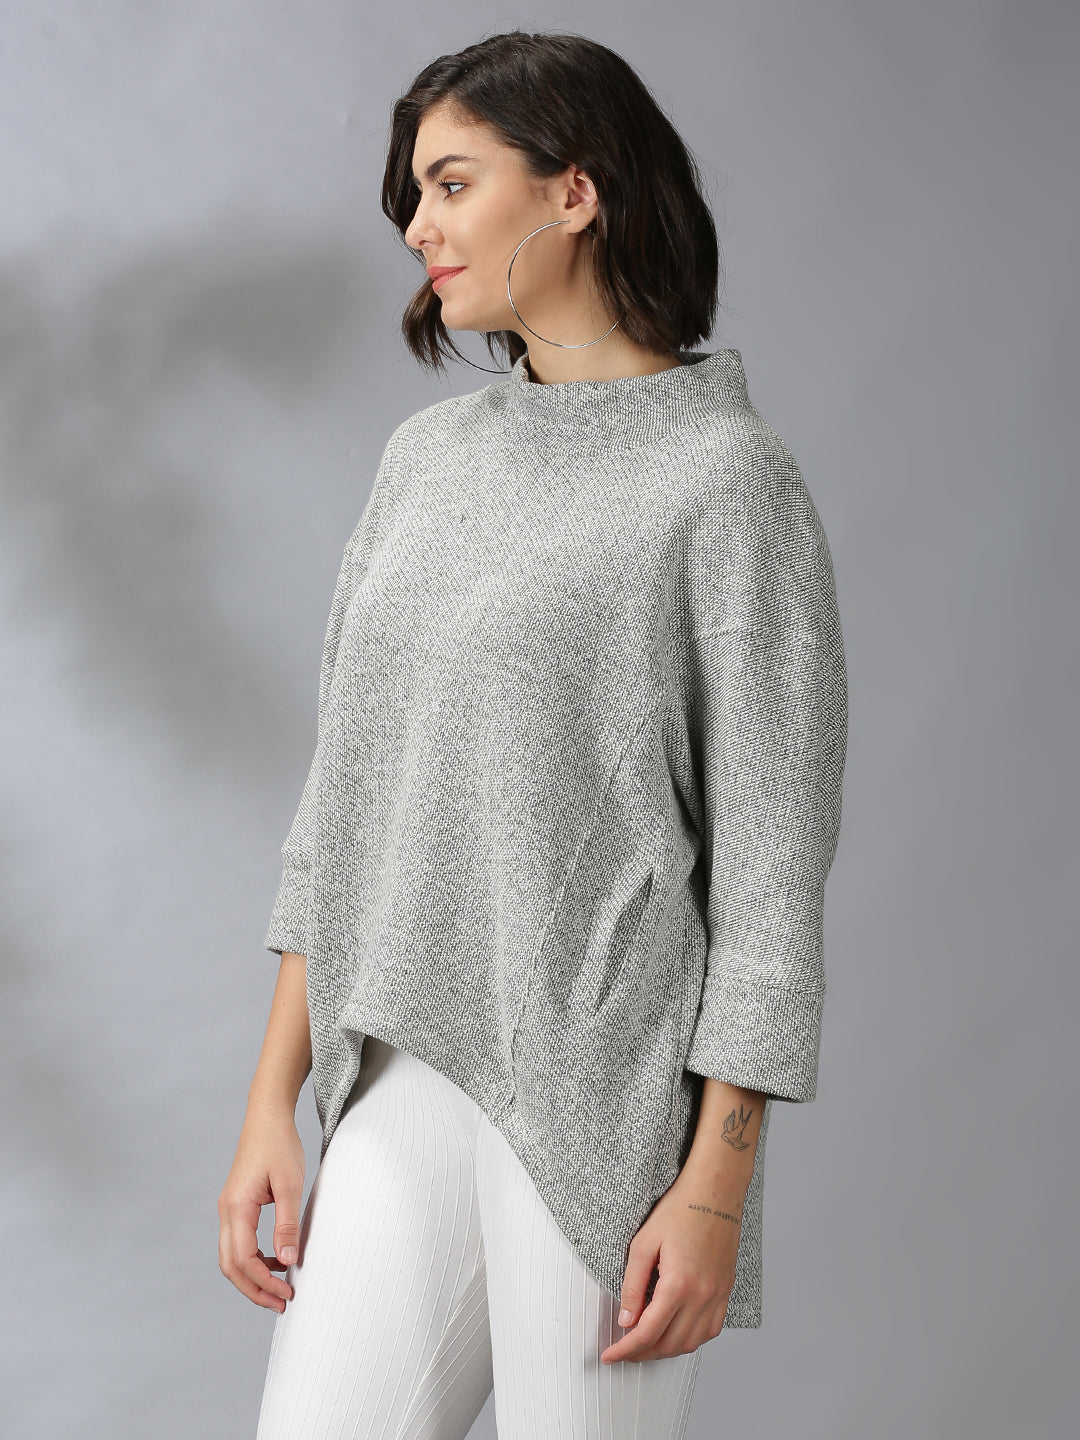 Buy Women Cocoon Shaped Circular Knit Sweatshirt Online in India - The ...